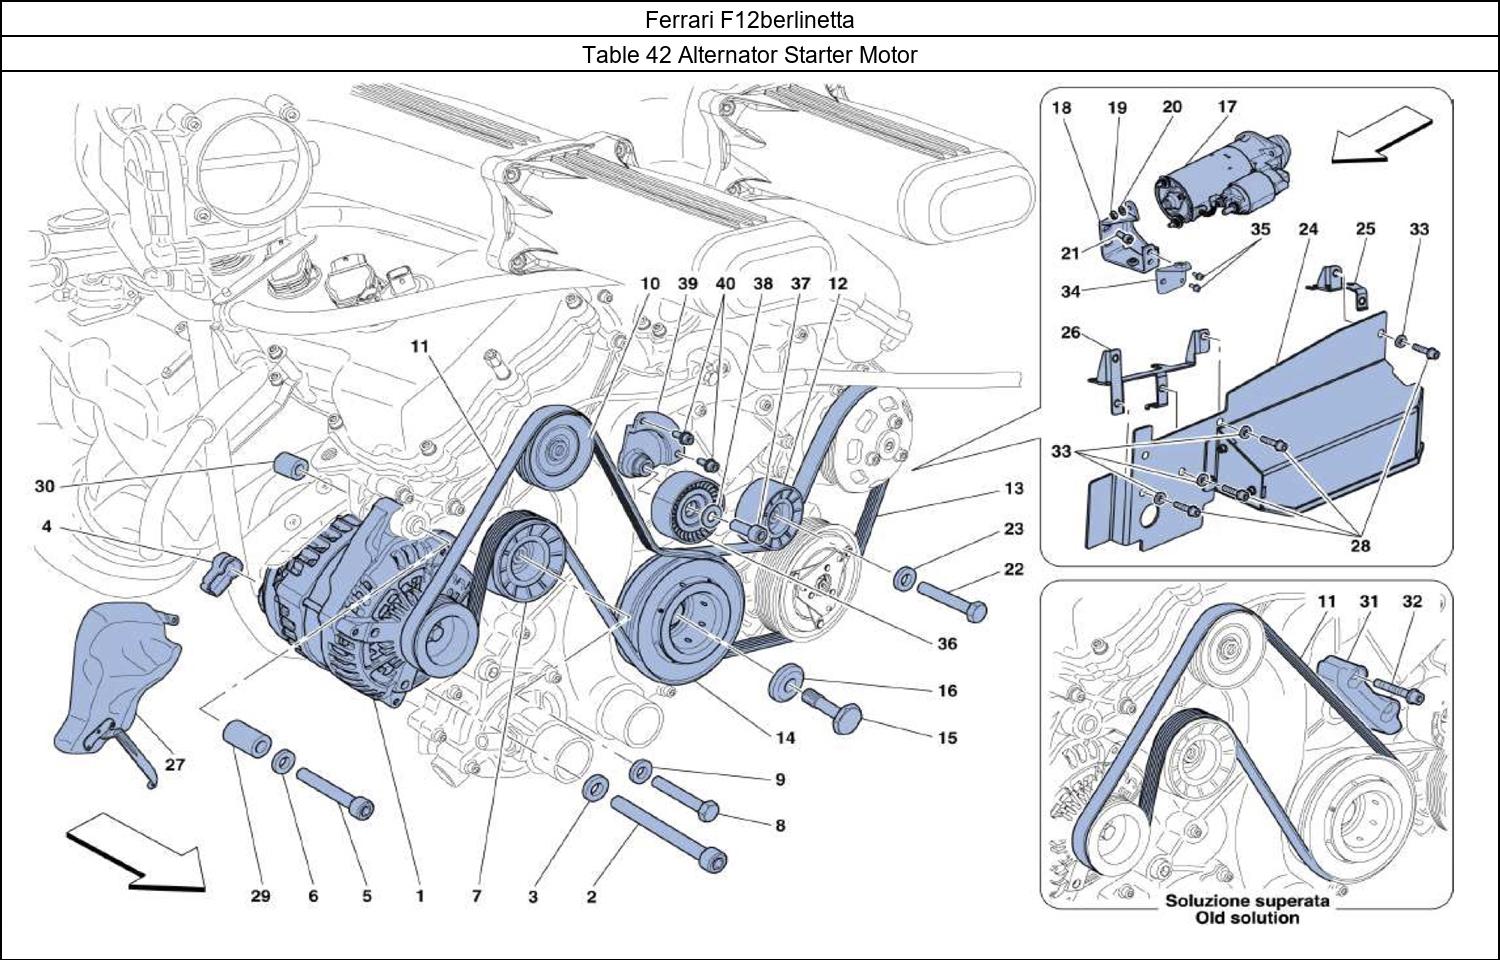 Ferrari Parts Ferrari F12berlinetta Table 42 Alternator Starter Motor